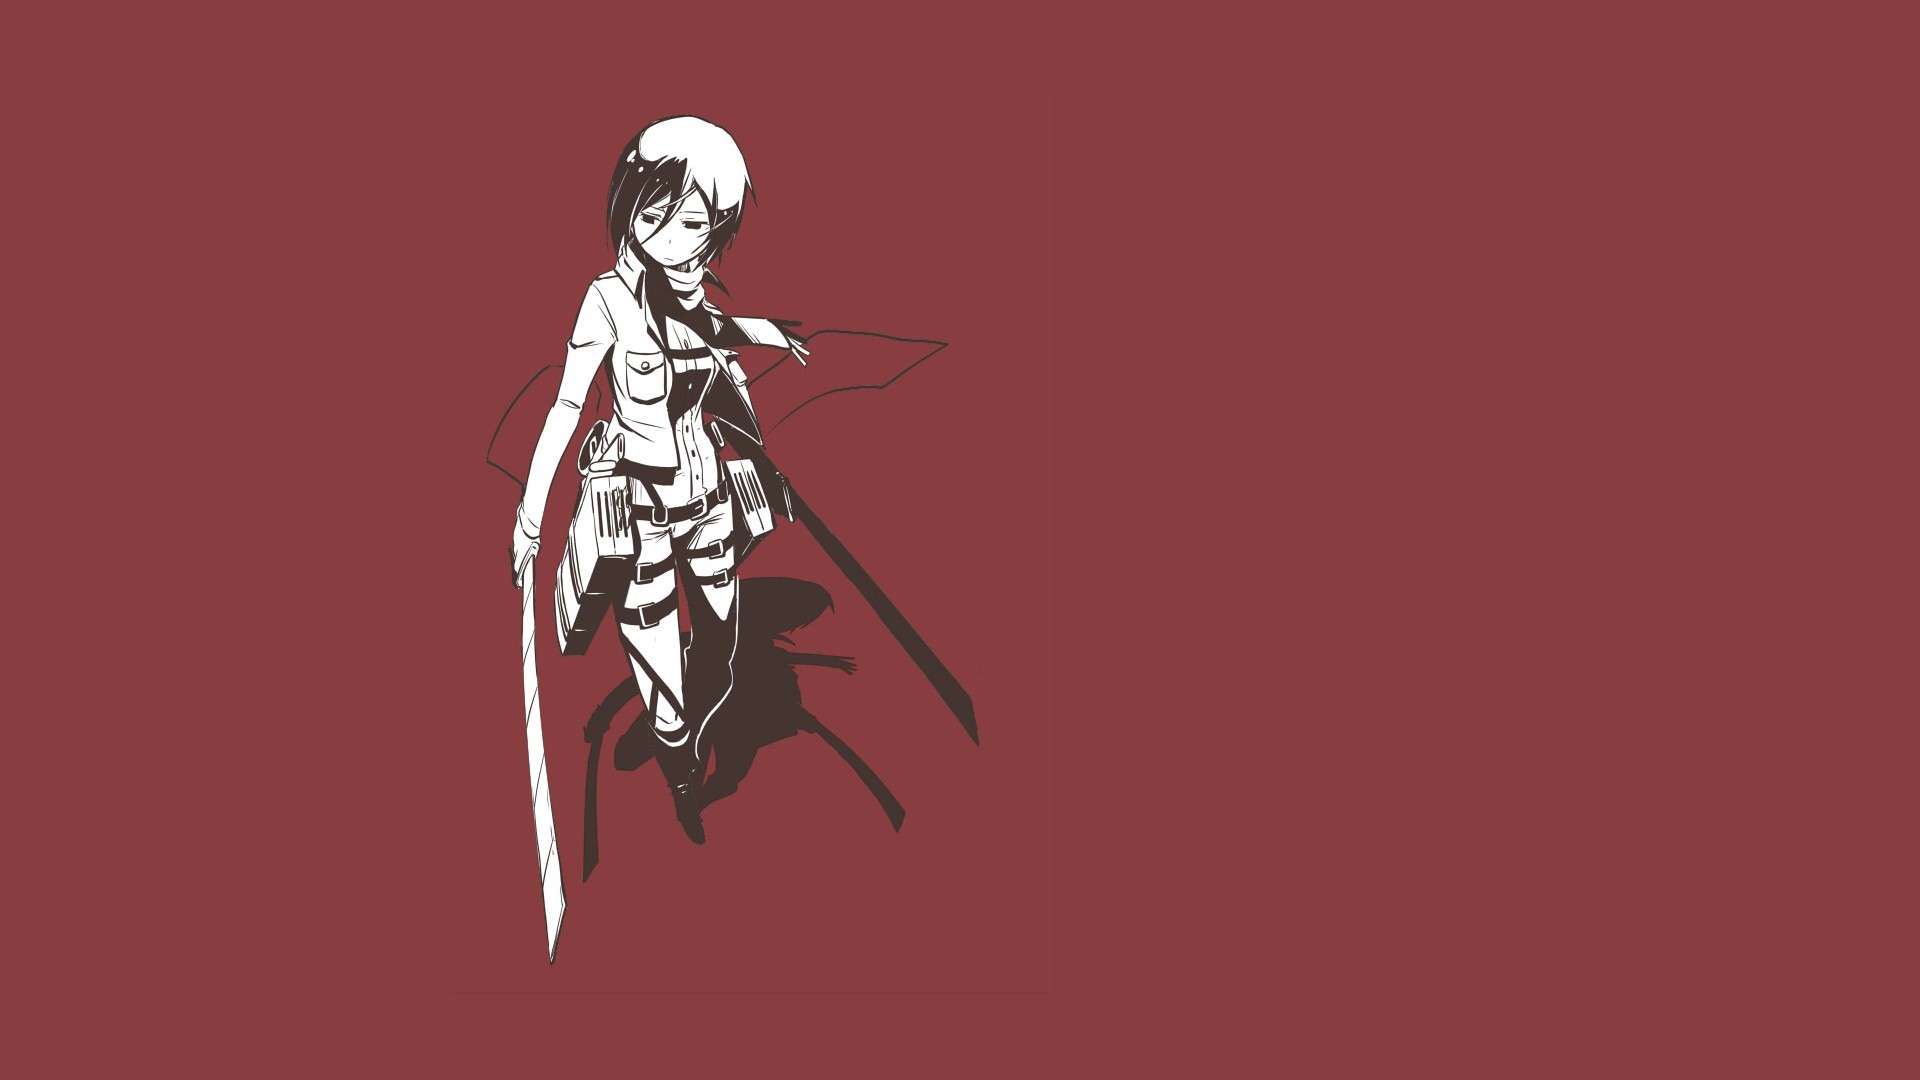 Anime 1920x1080 Mikasa Ackerman anime girls anime minimalism simple background women with swords sword weapon